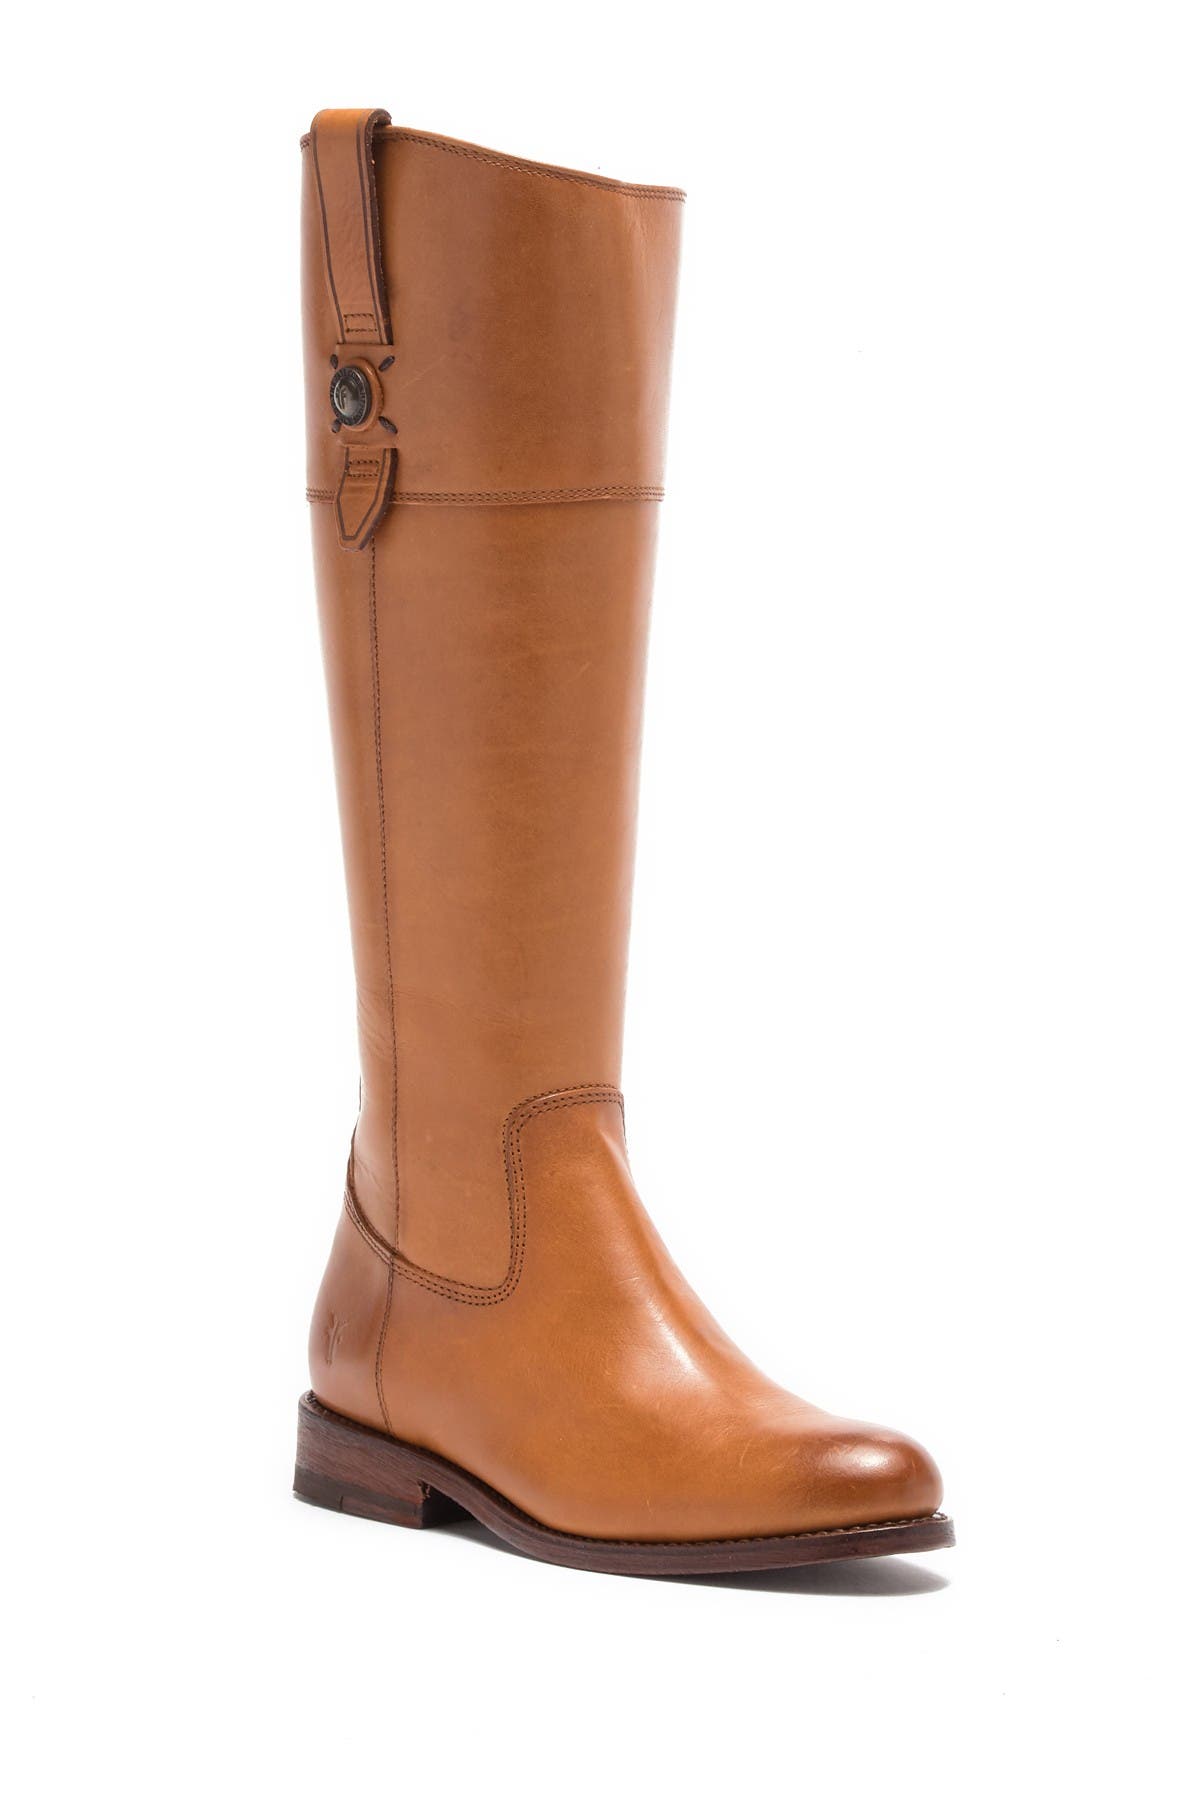 Frye | Jayden Leather Tall Boot 